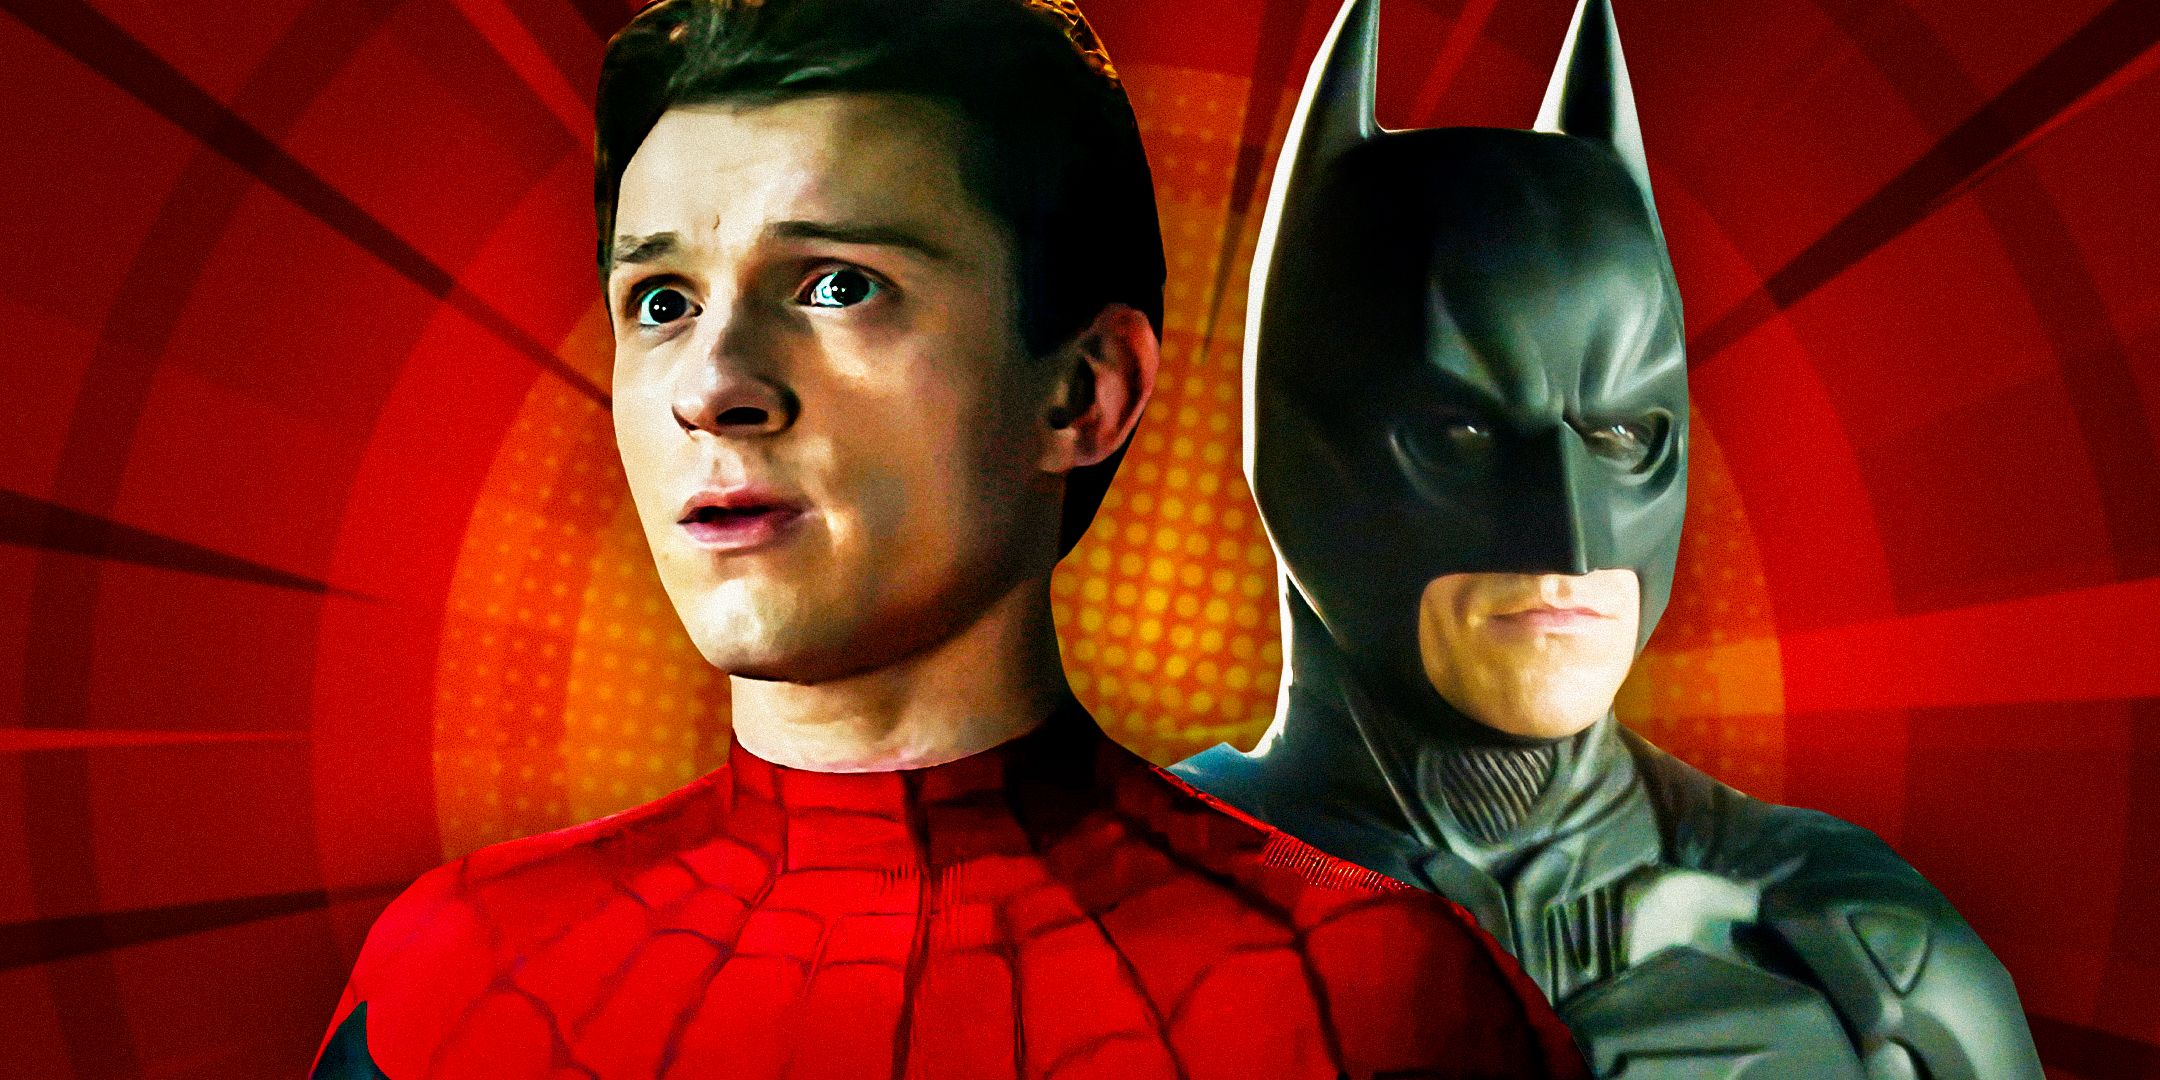 A split image of Tom Holland's Peter Parker and Christian Bale's Batman